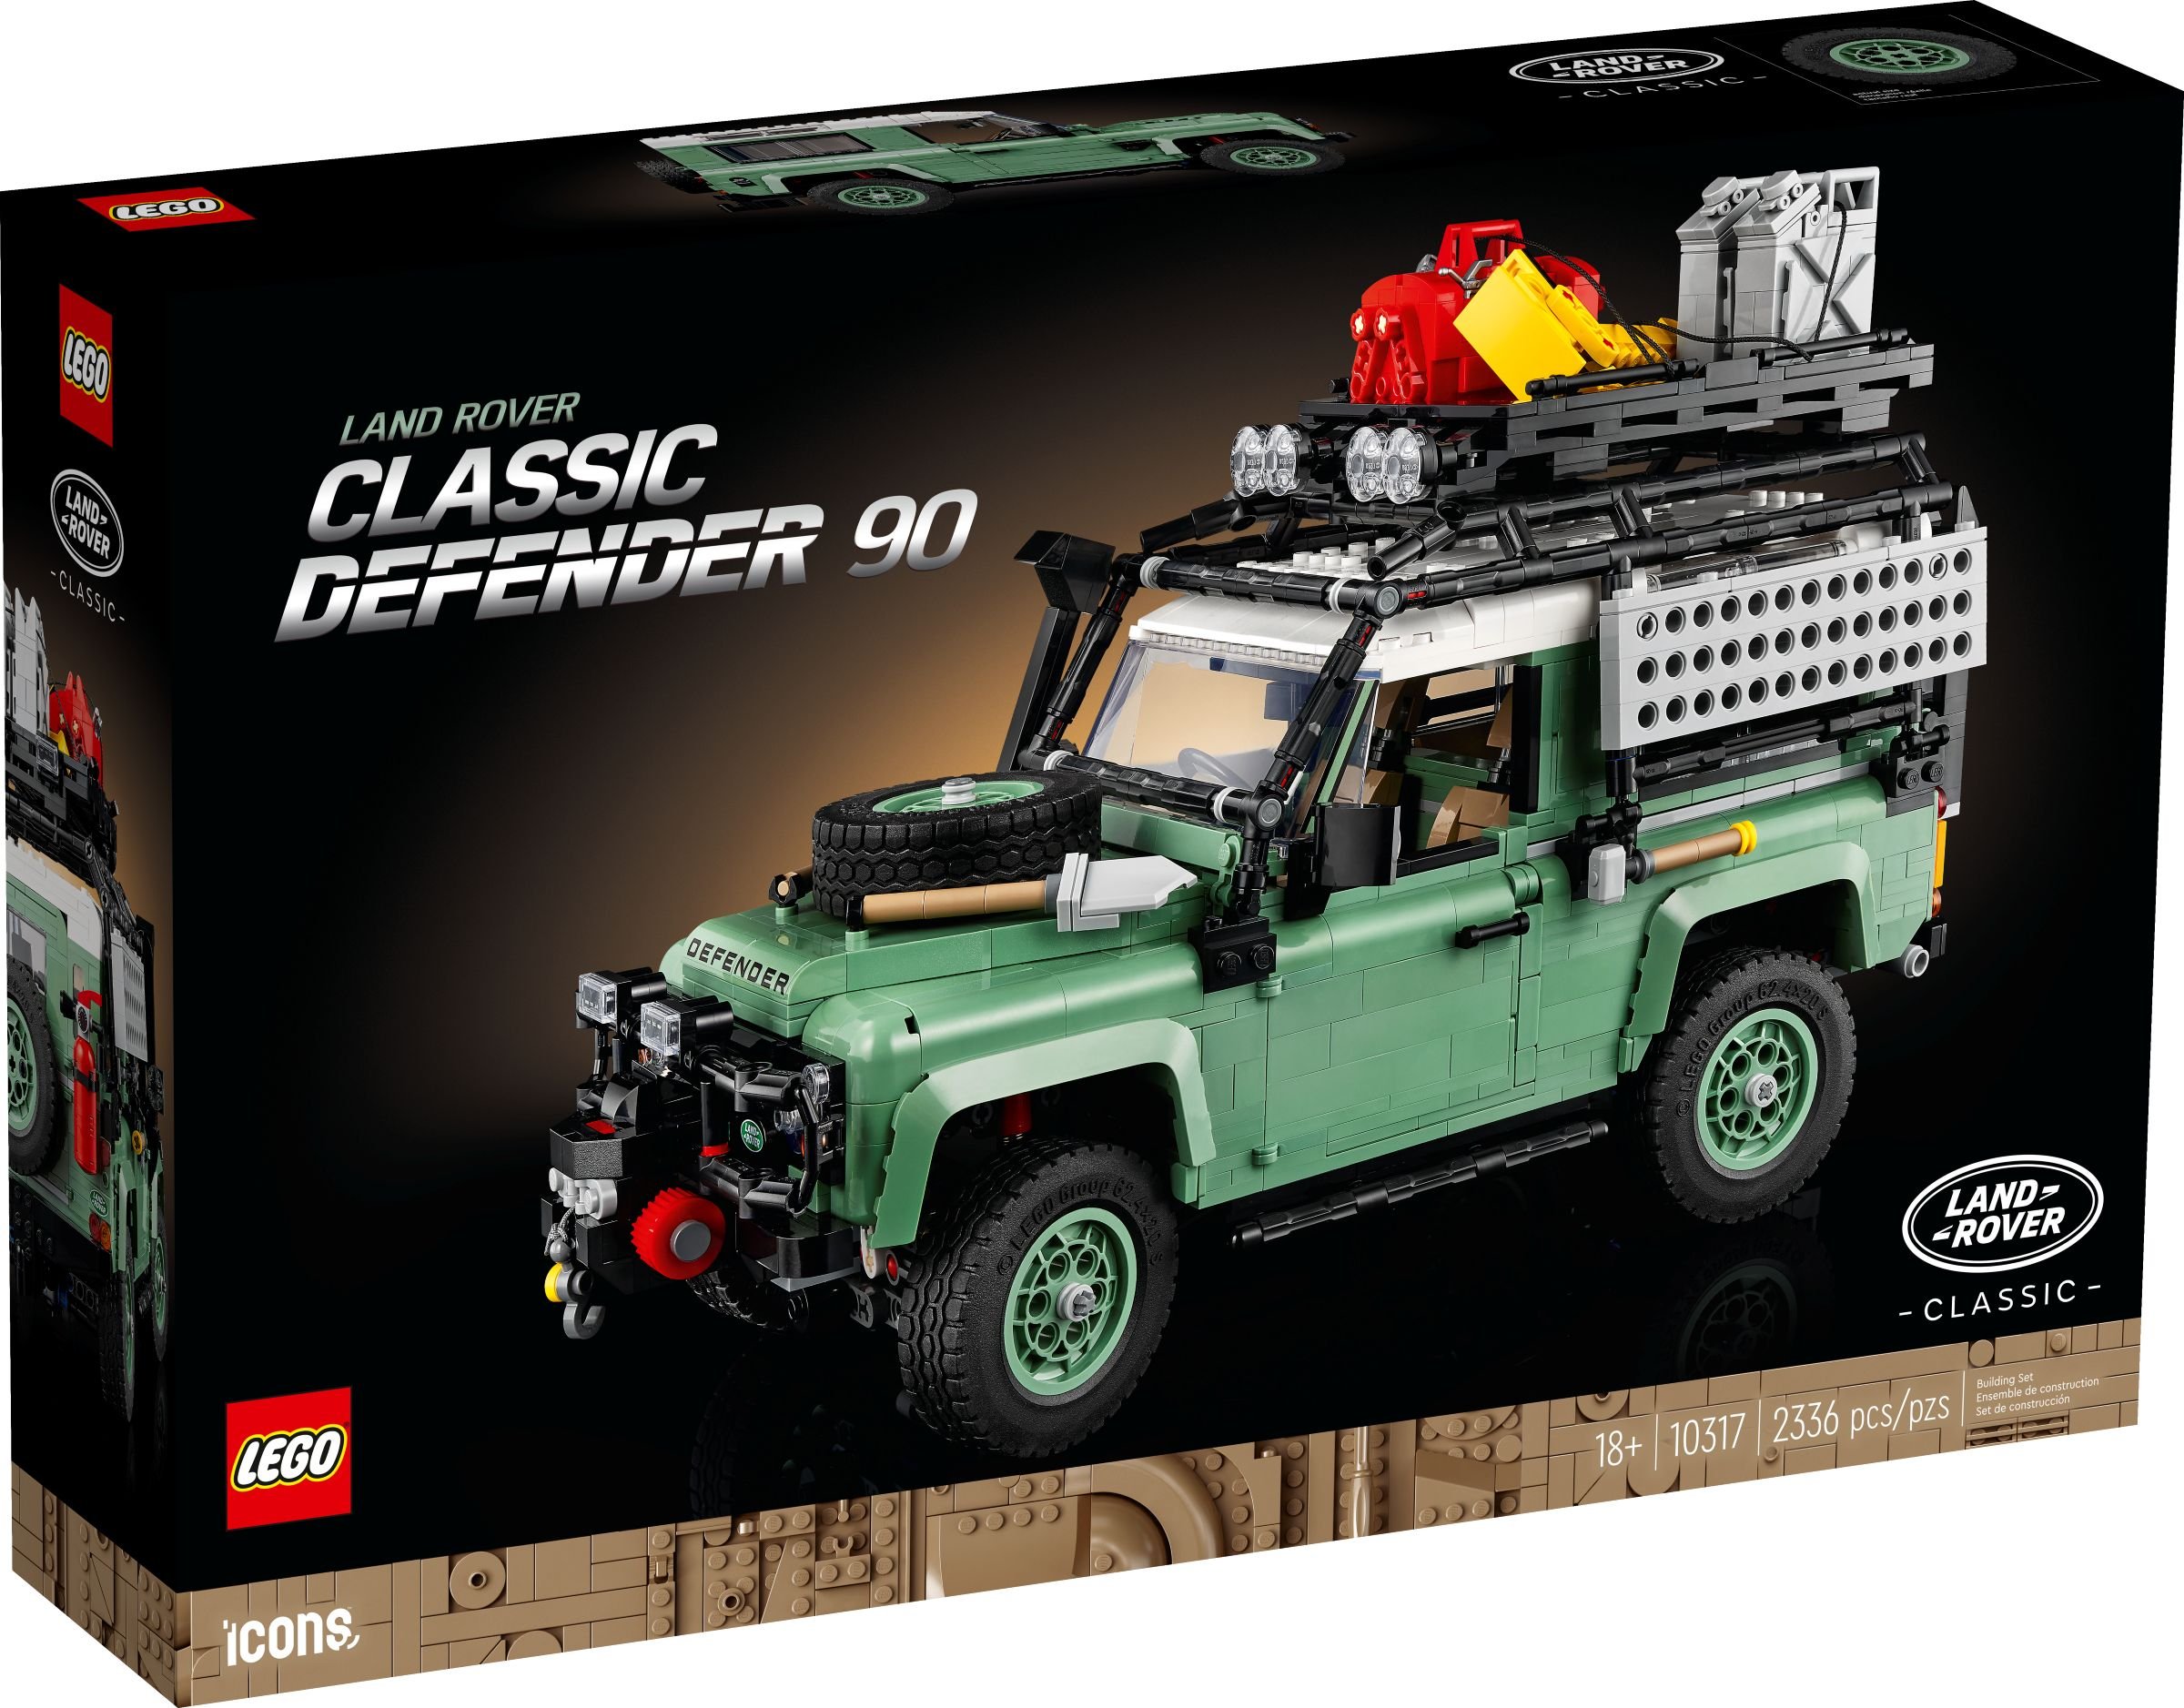 LEGO Advanced Models 10317 Land Rover Classic Defender 90 LEGO_10317_alt1.jpg